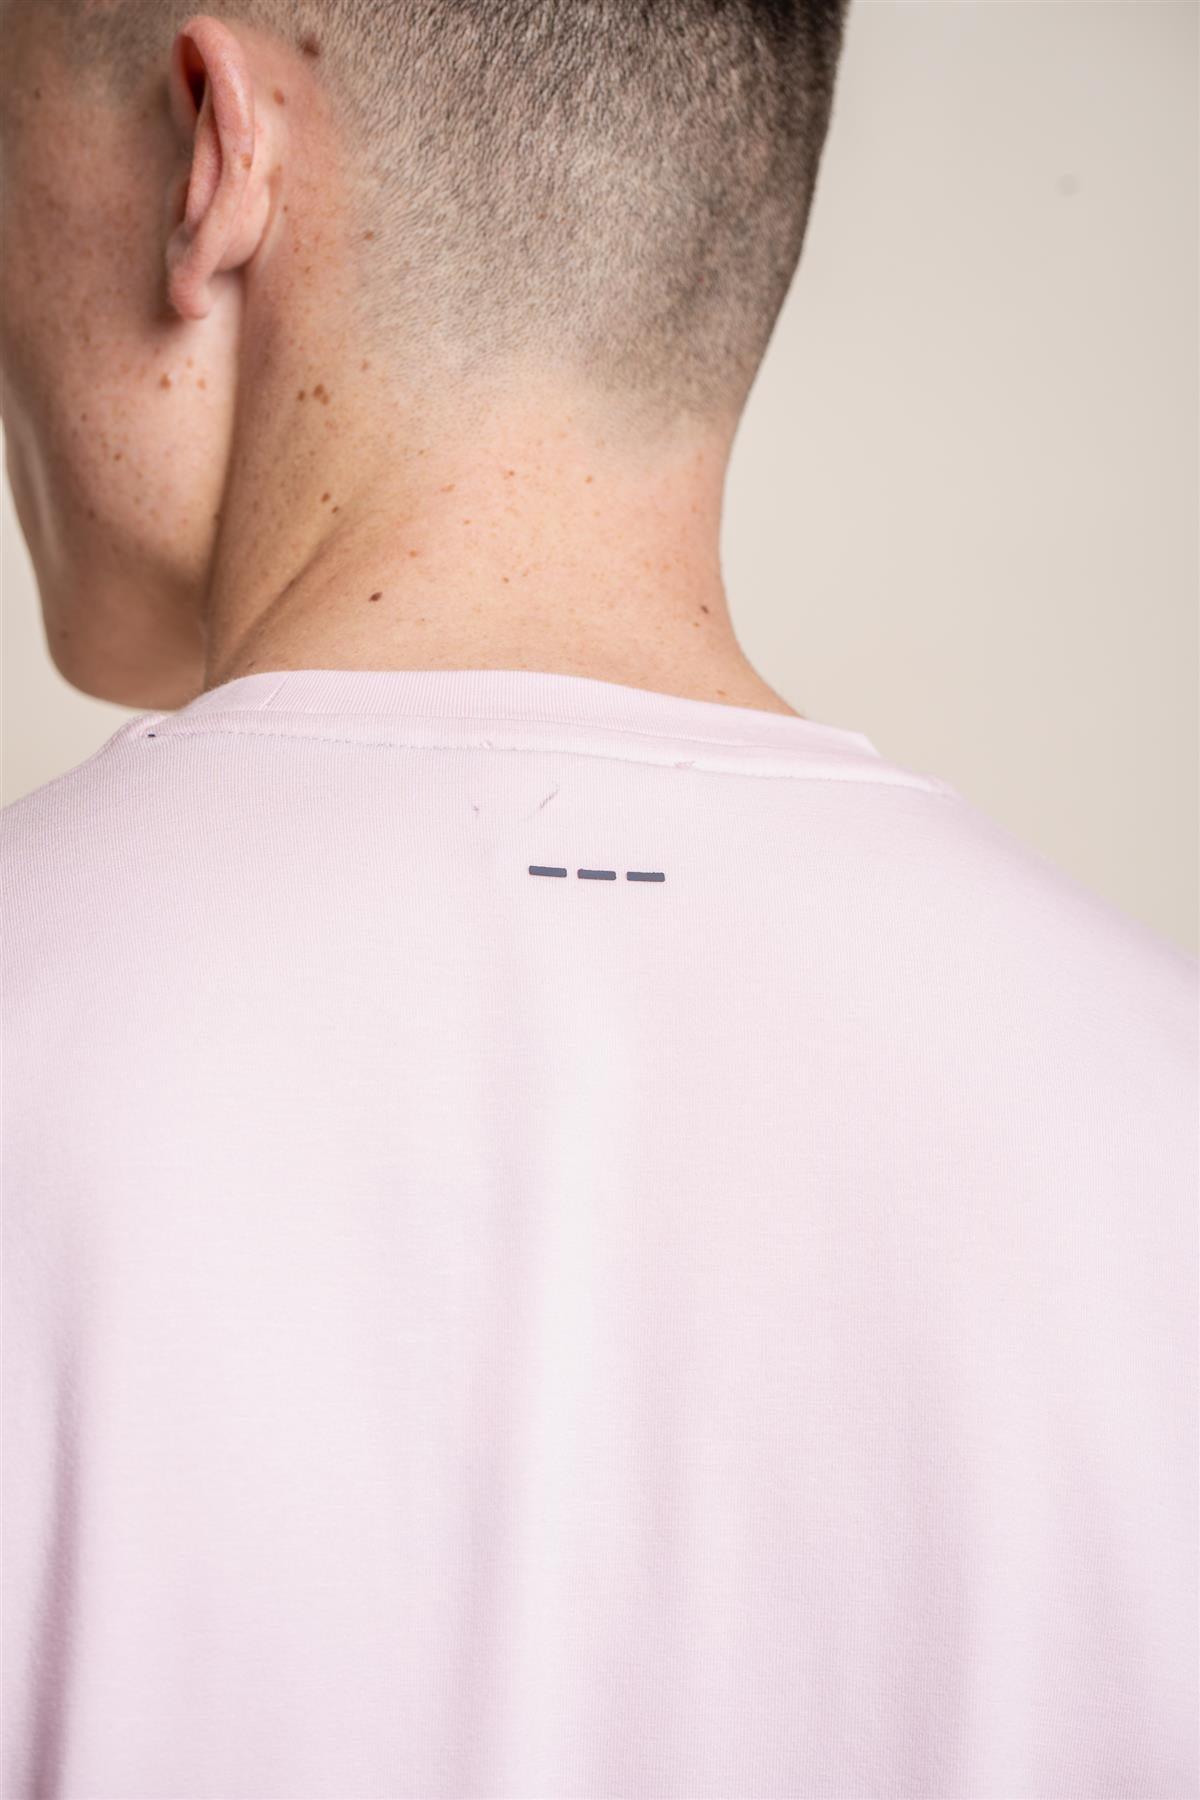 Bogart pink T-shirt back detail